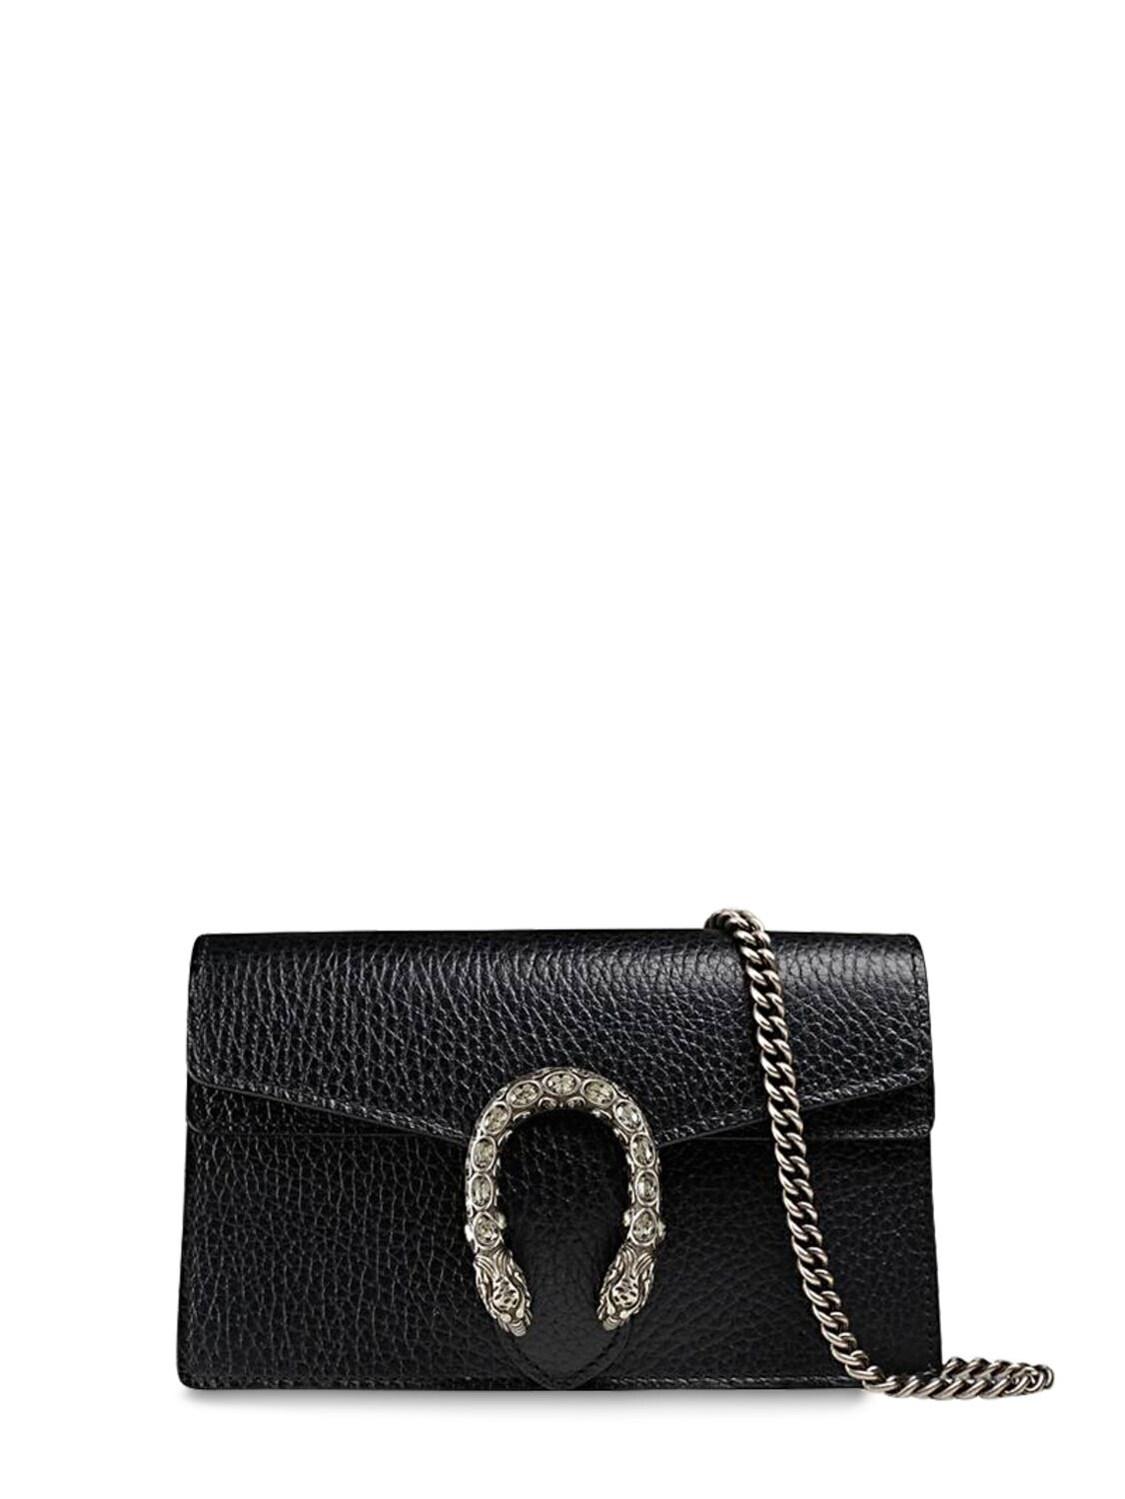 Gucci Leather Dionysus Shoulder Bag in Black - Save 66% - Lyst